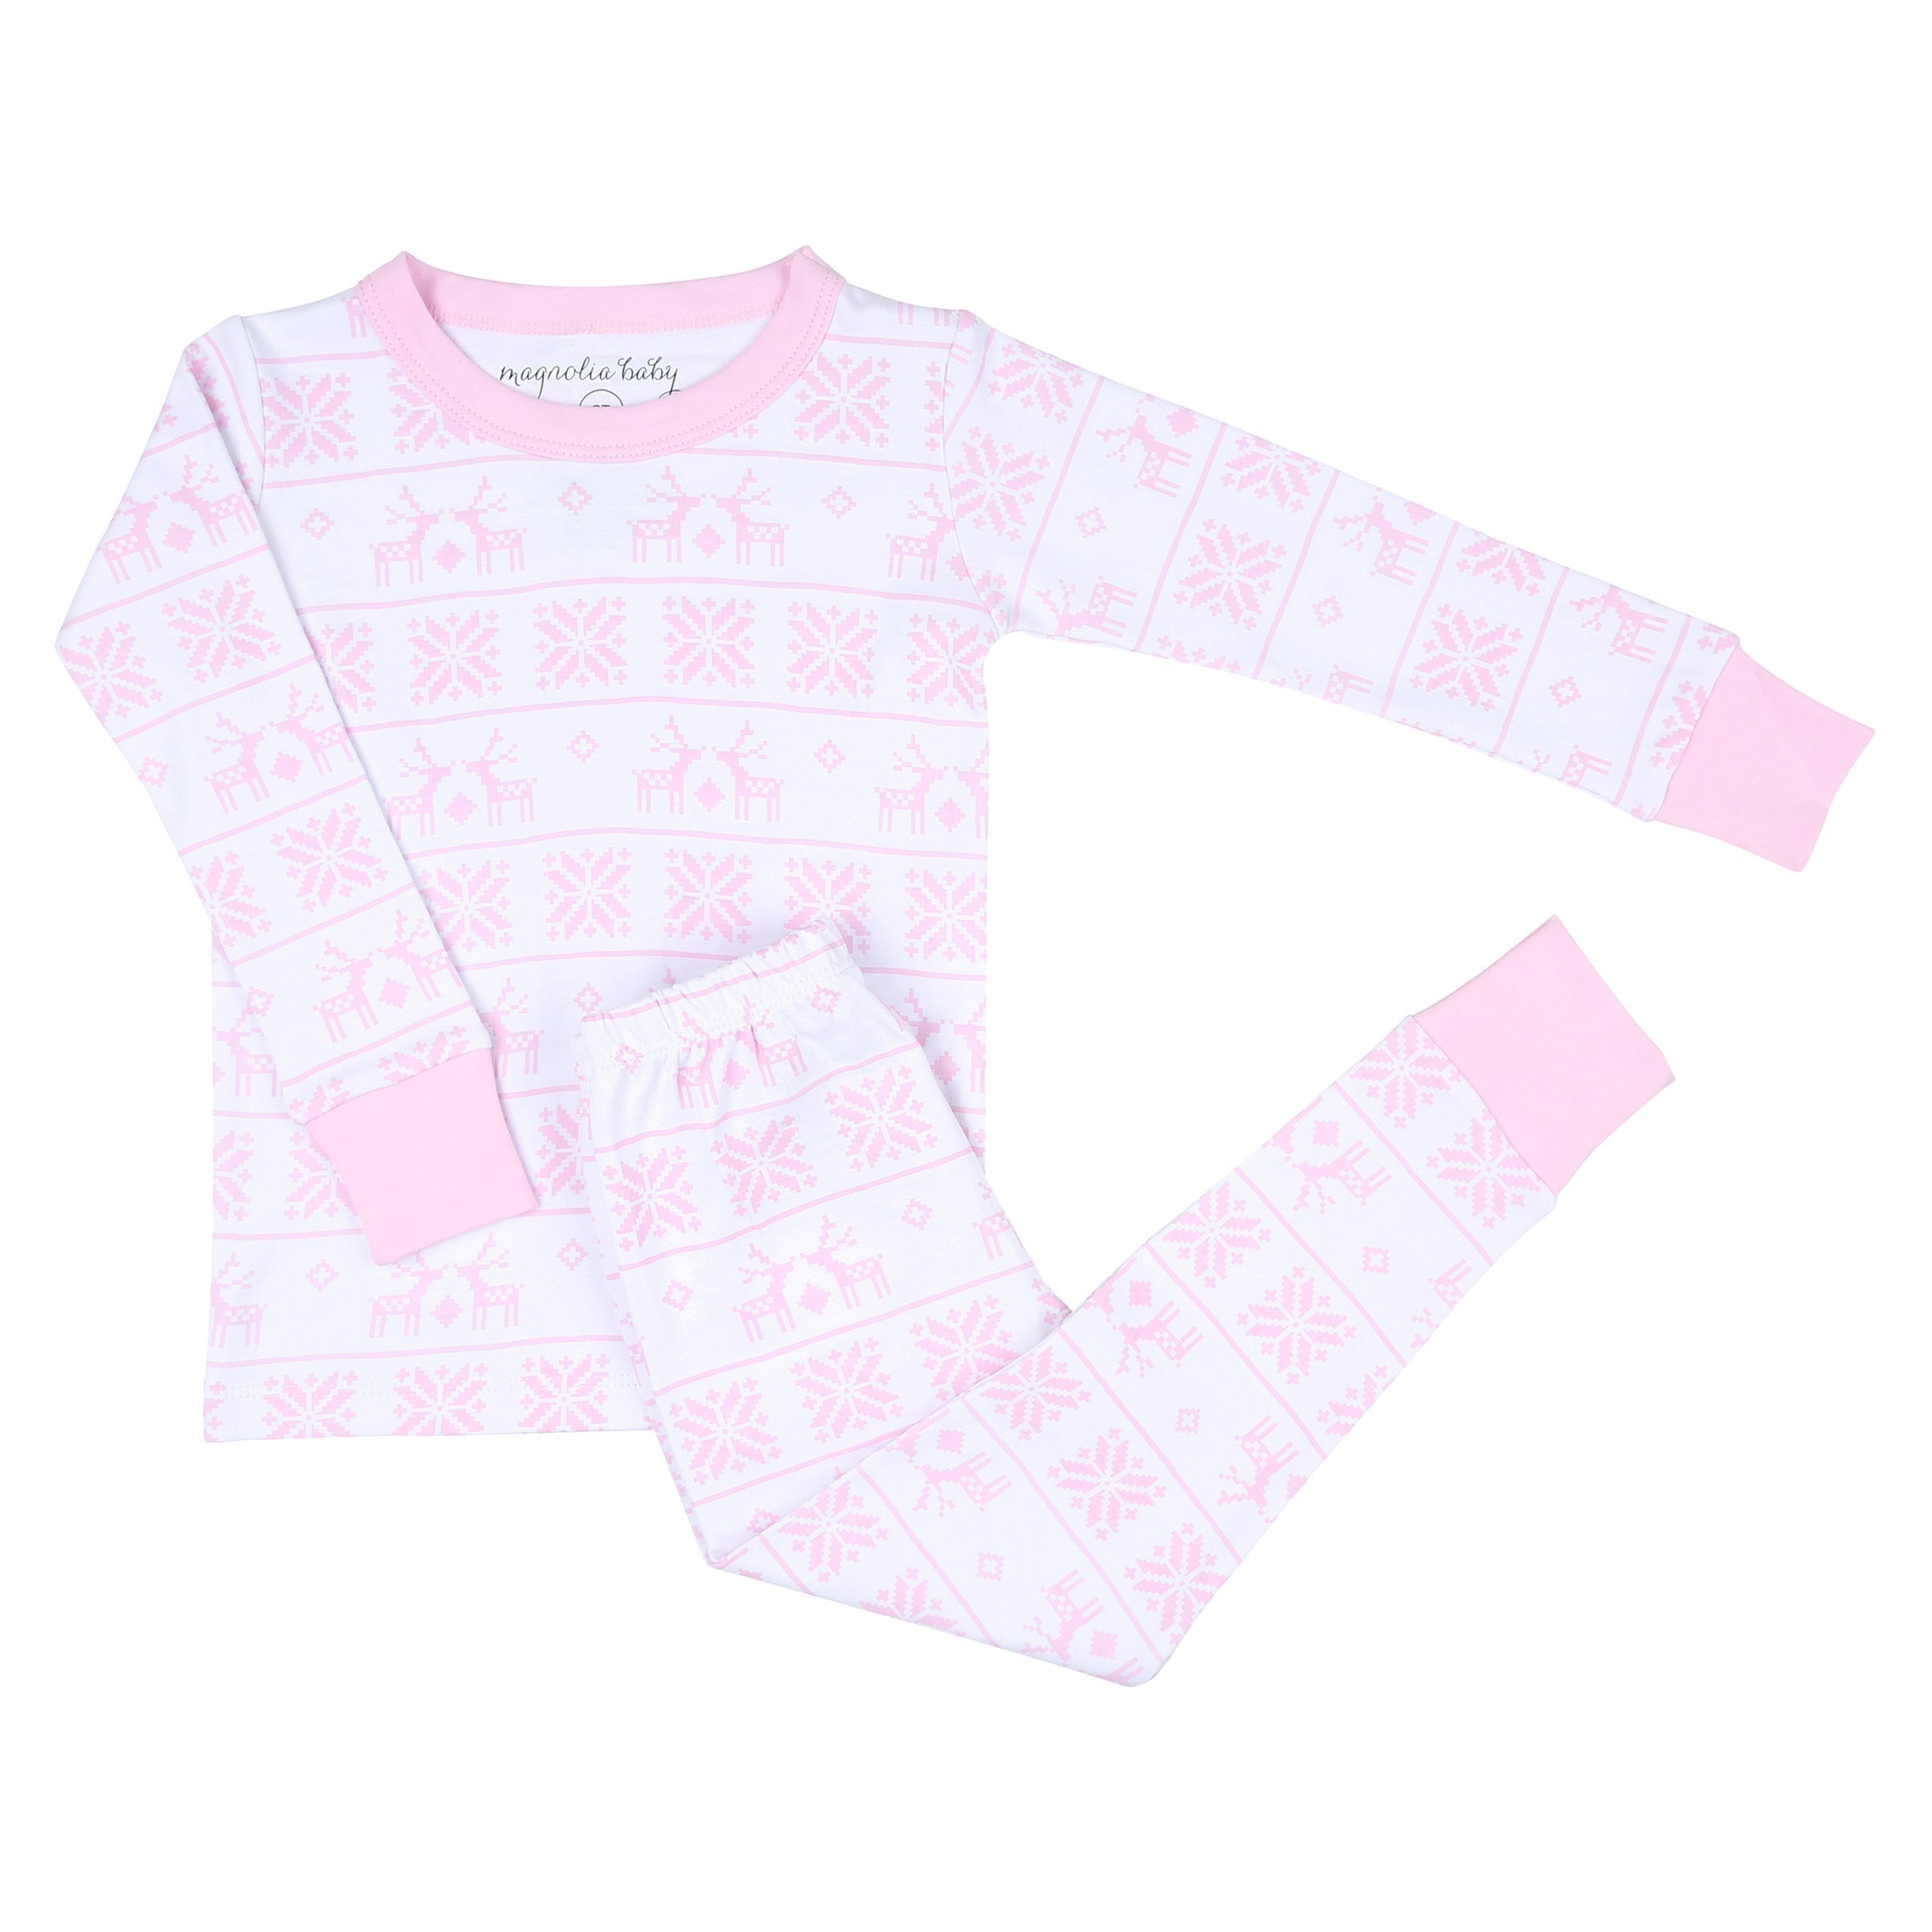 Baby Fair Isle Long Pajamas - Pink